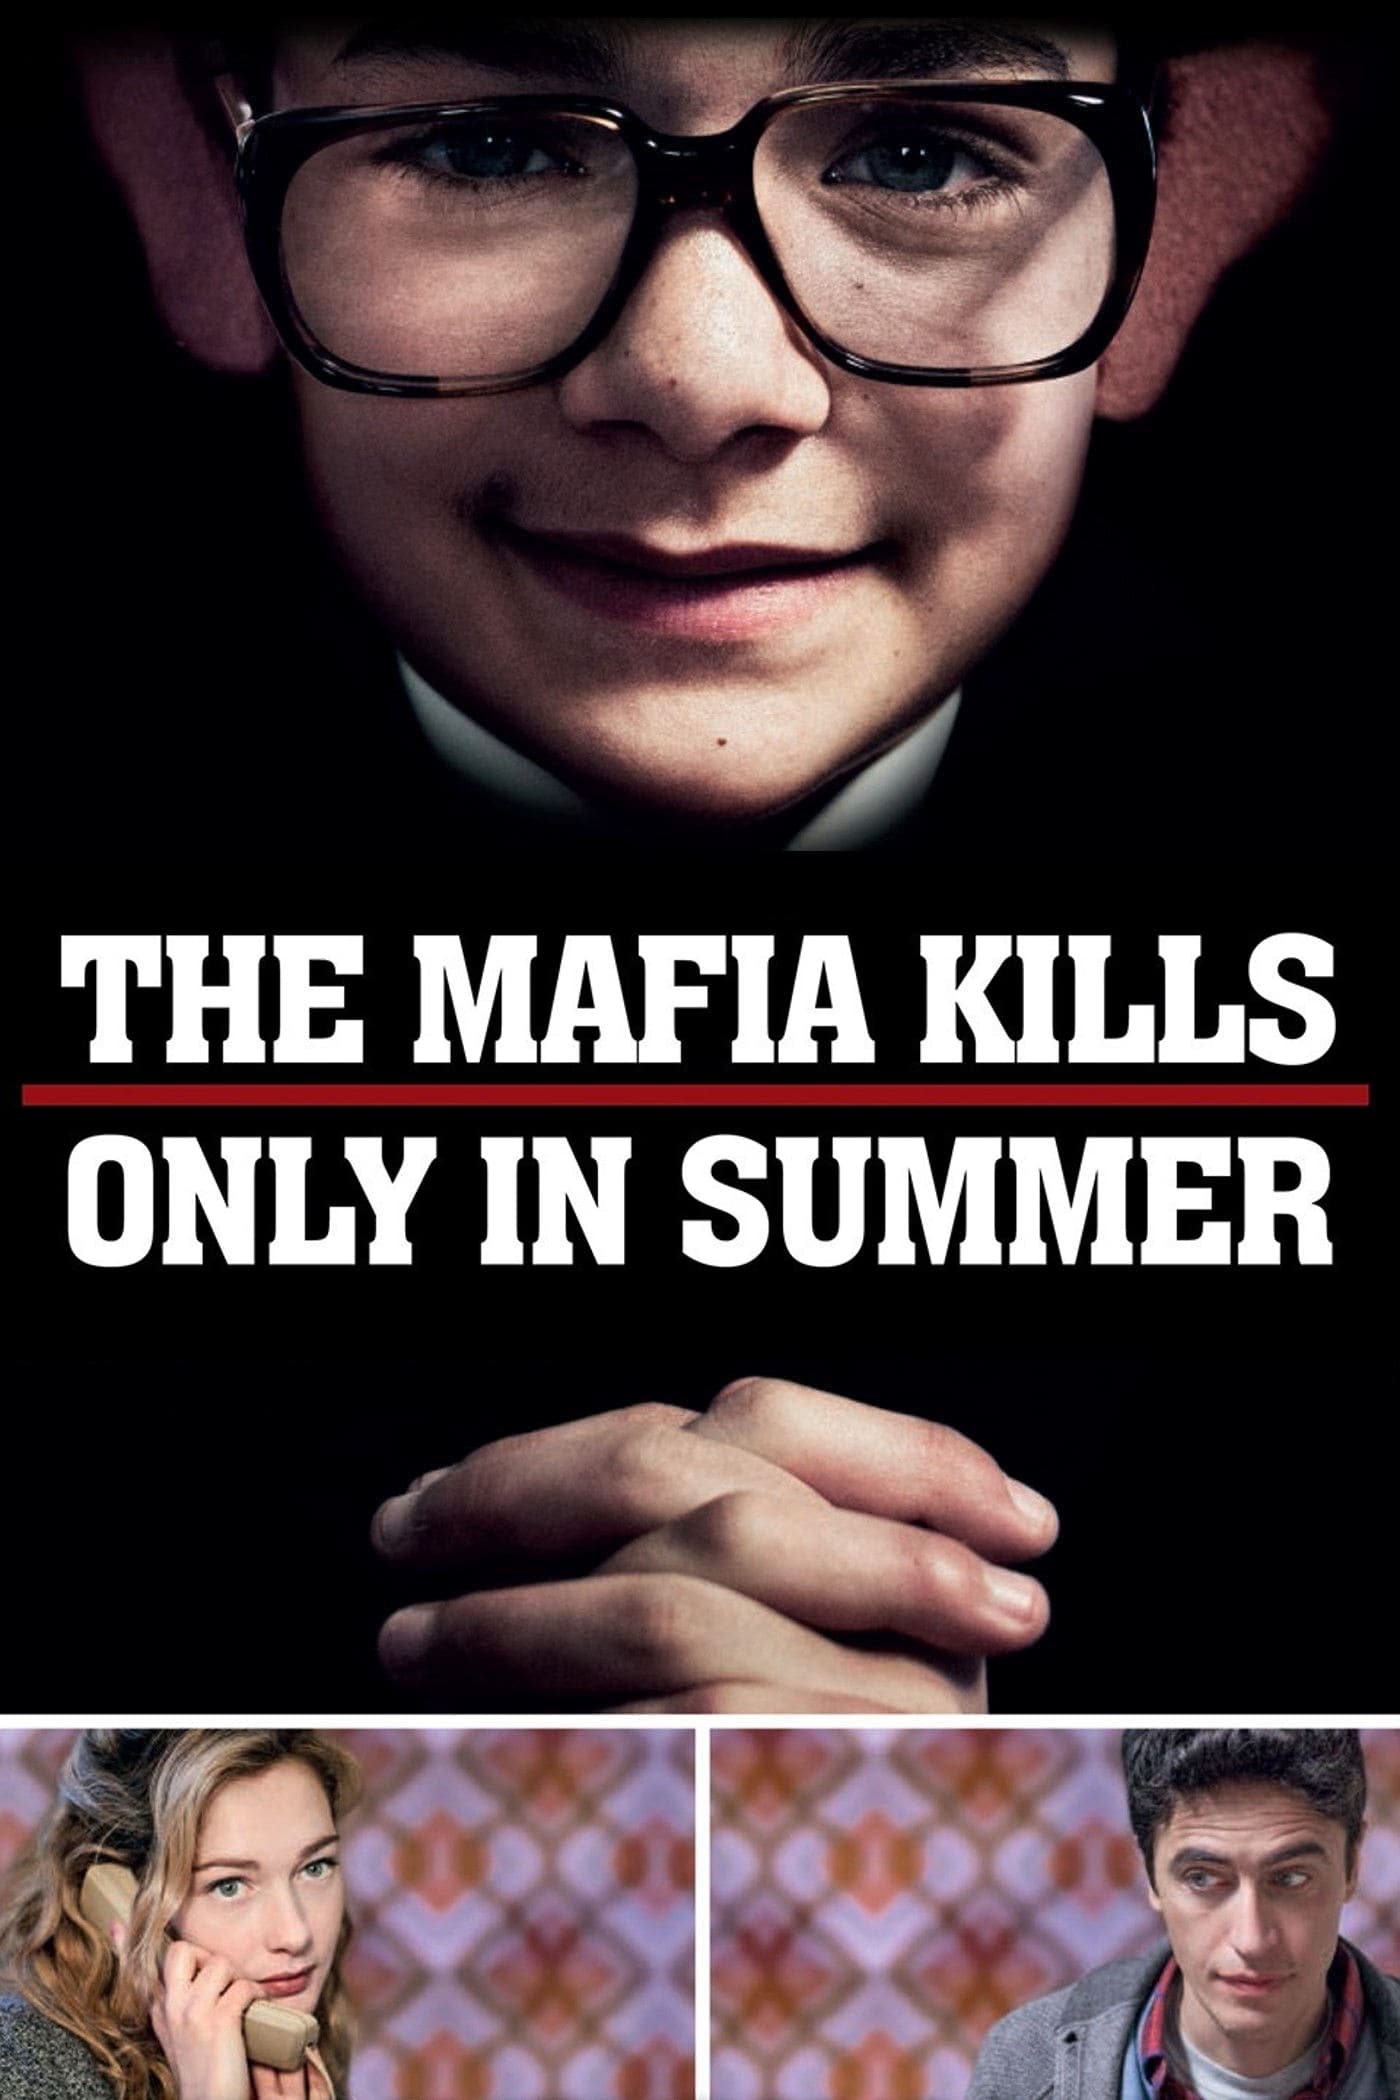 The Mafia Kills Only in Summer